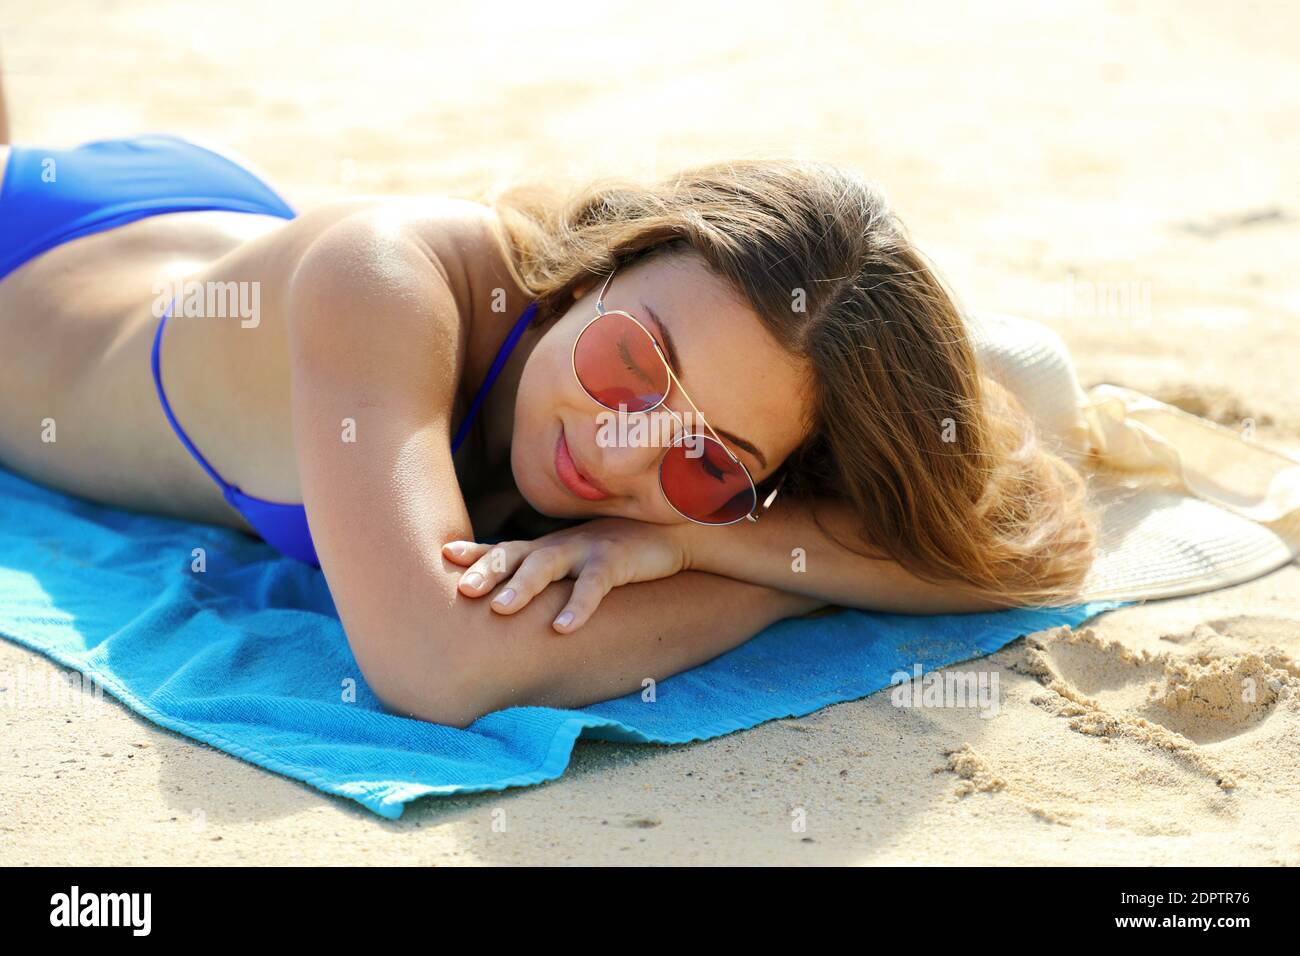 Beautiful Woman Wearing Bikini Lying Relaxing On Beach Stock Photo - Alamy